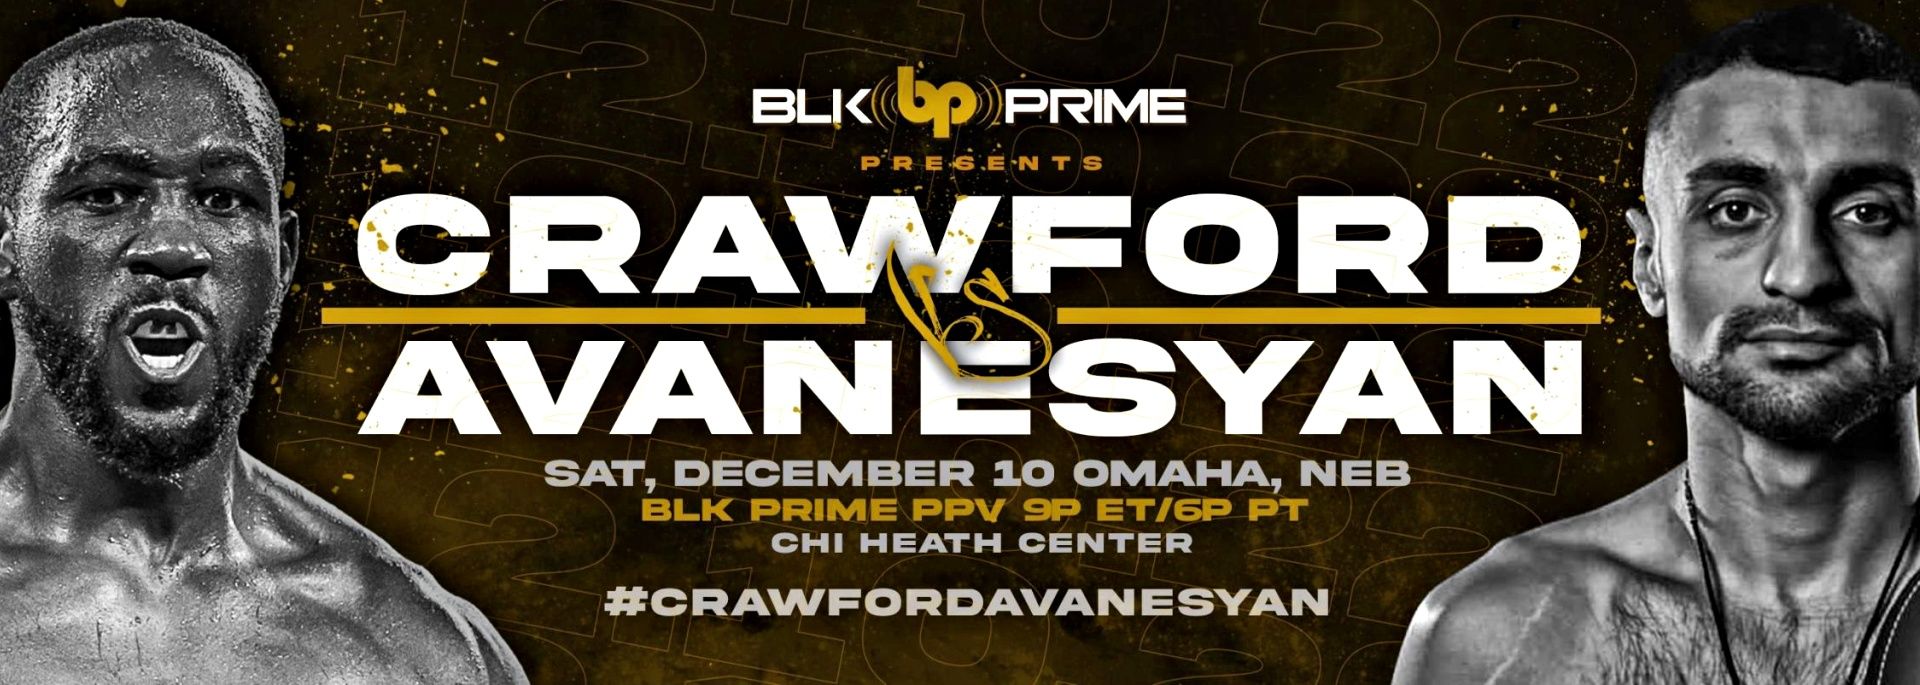 Crawford vs Avanesyan - BLK Prime PPV - Dec. 10 - 9 pm ET